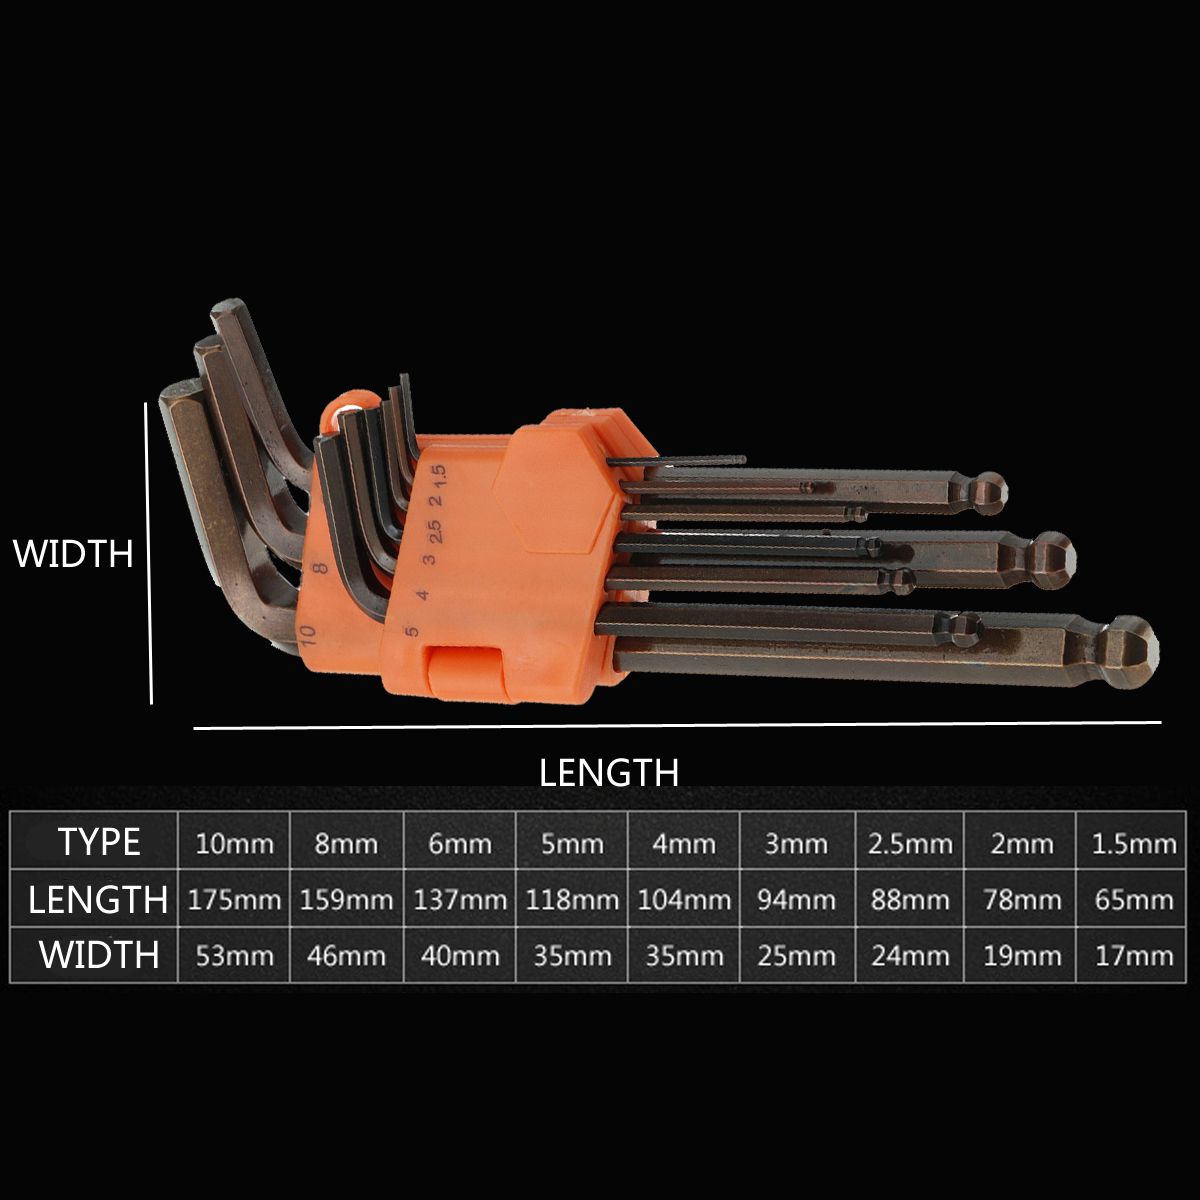 9Pcs-Hex-Key-Allen-Tools-Wrench-Set-Extra-long-Arm-AllenTorque-Sae-Memtric-Torx-Spanner-1451581